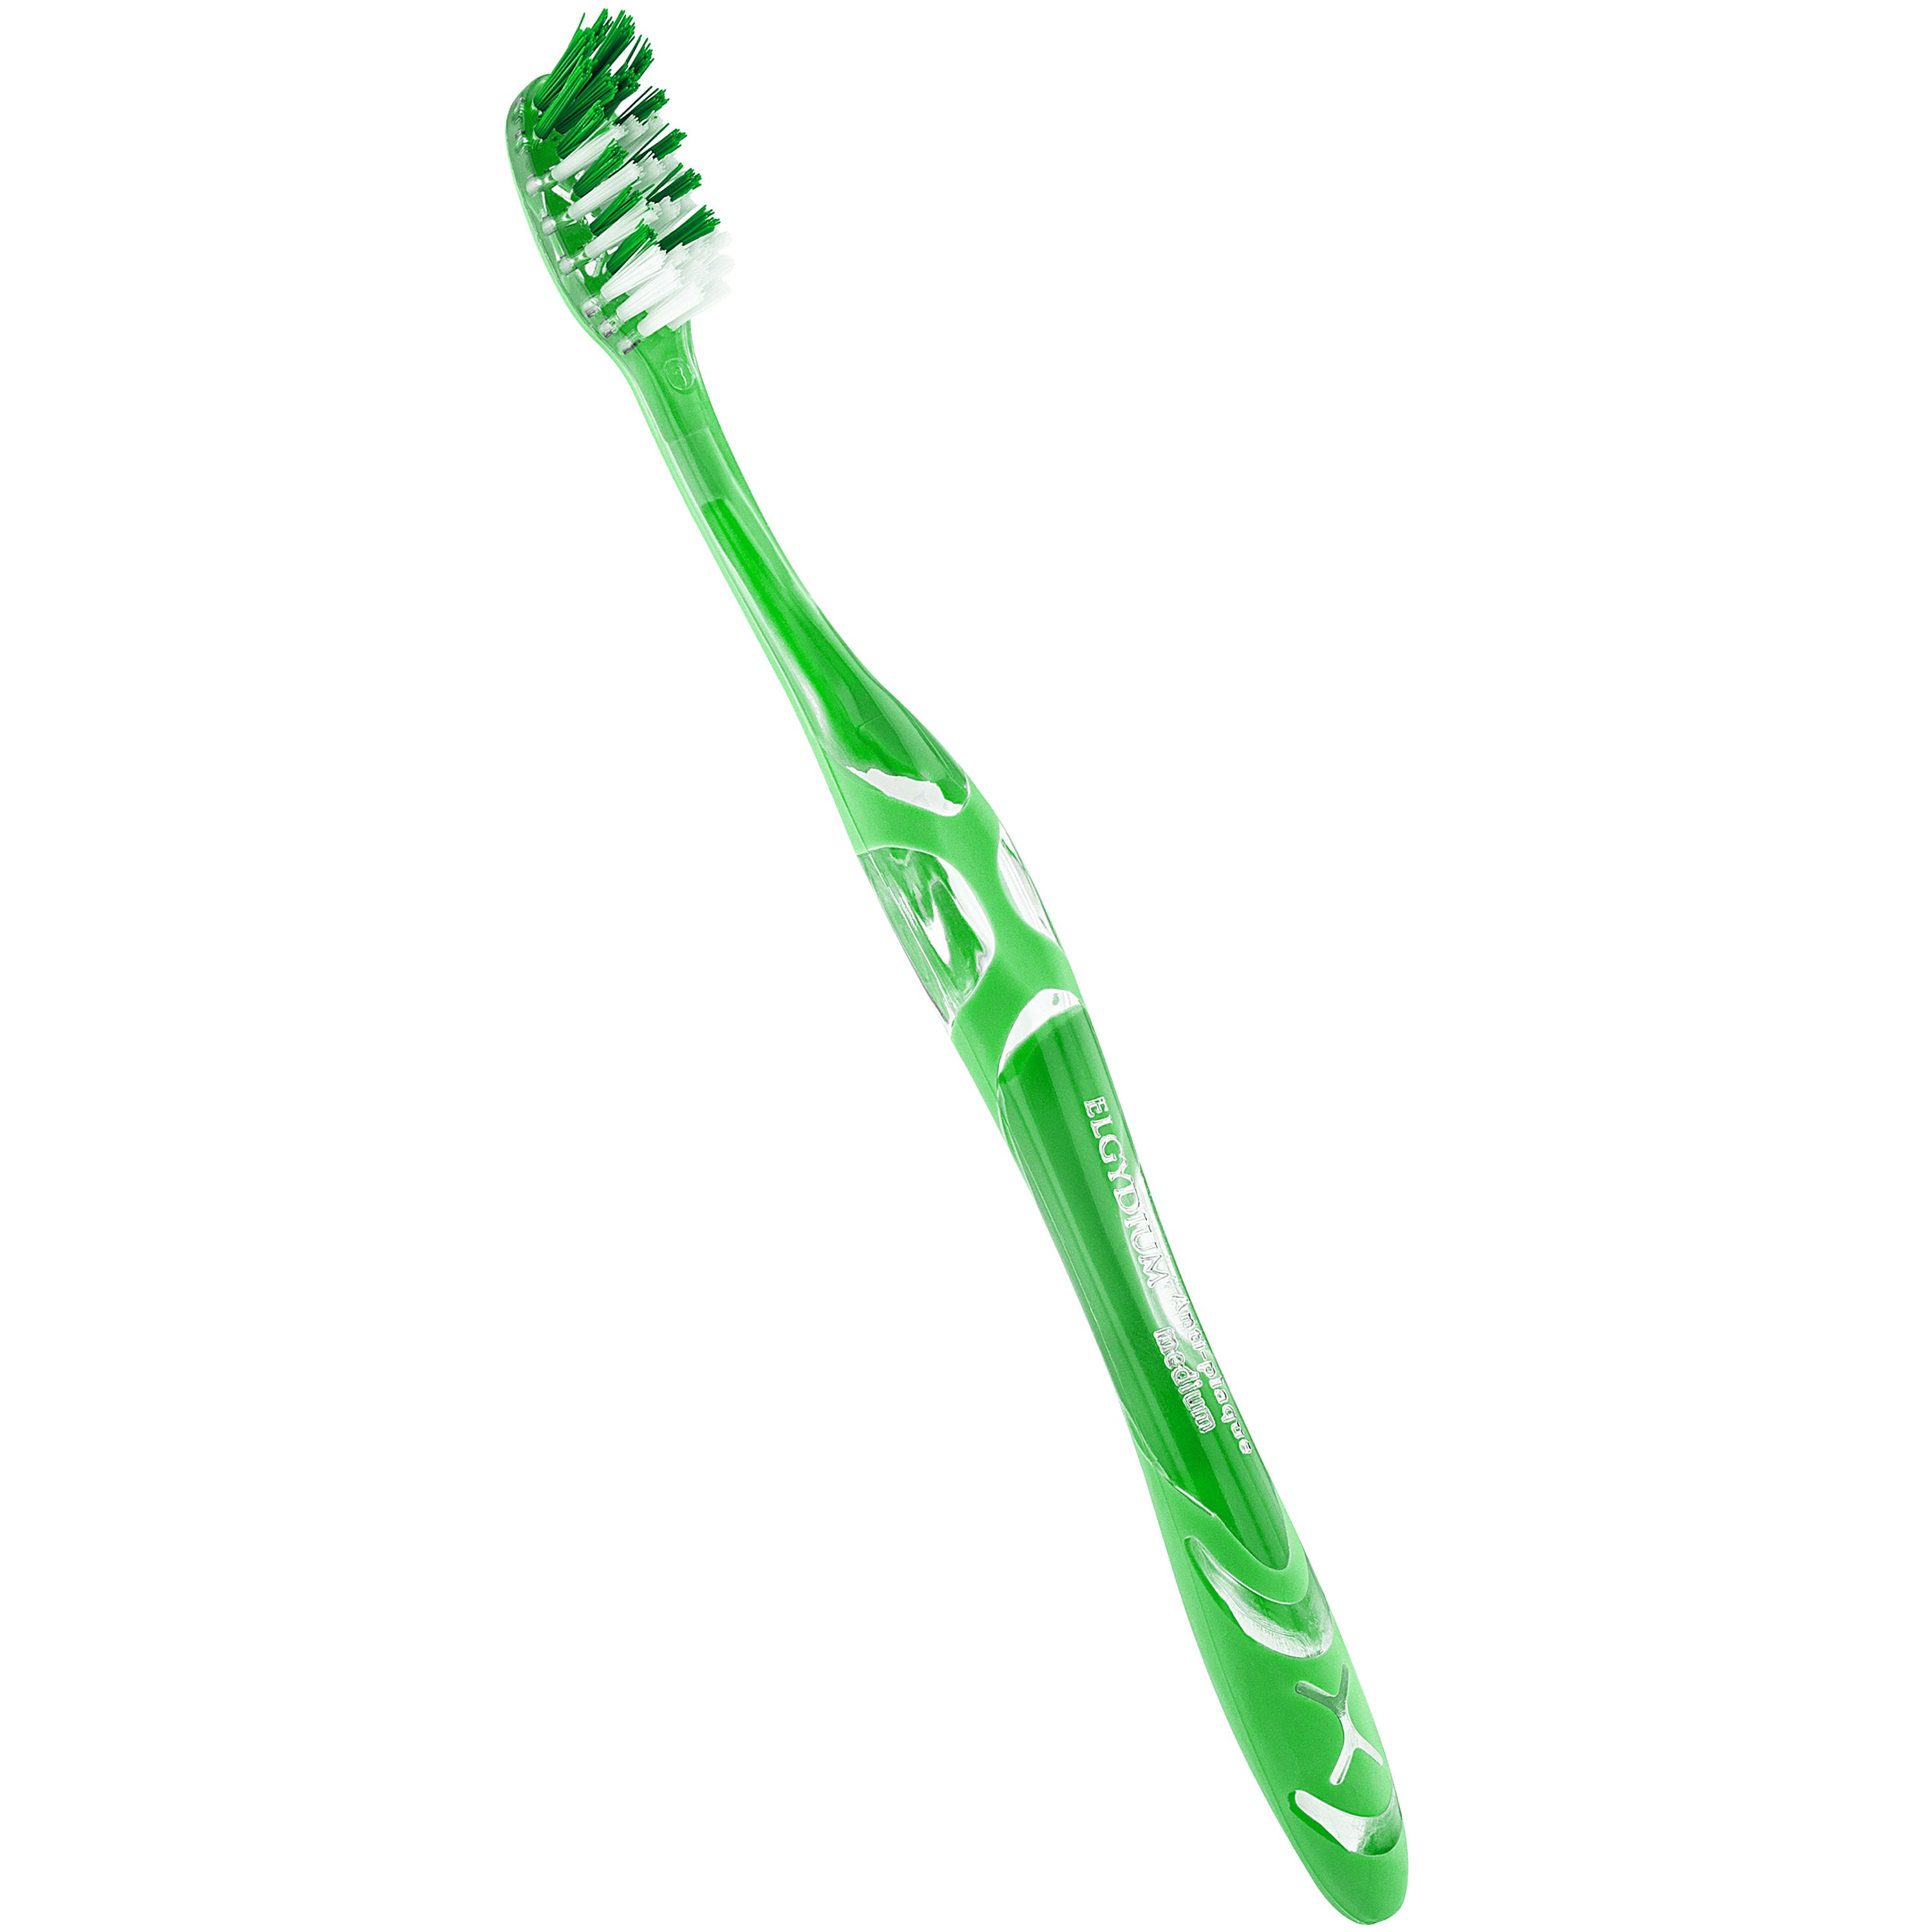 Elgydium Toothbrush Antiplaque Medium Μέτρια Οδοντόβουρτσα για Βαθύ Καθαρισμό & Απομάκρυνση Οδοντικής Πλάκας 1 Τεμάχιο – Πράσινο